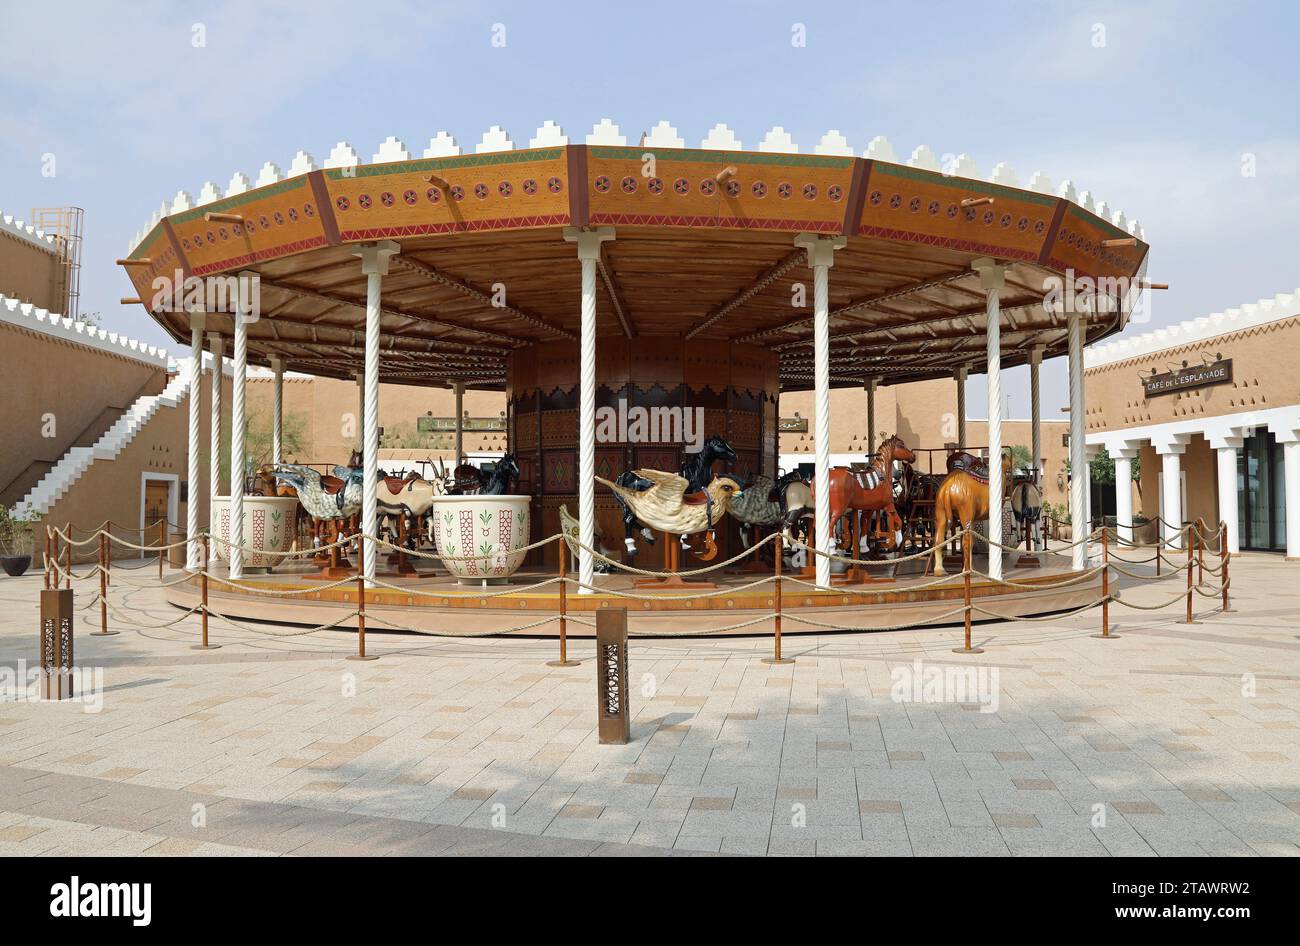 Carousel at Bujairi Terrace in Riyadh Stock Photo